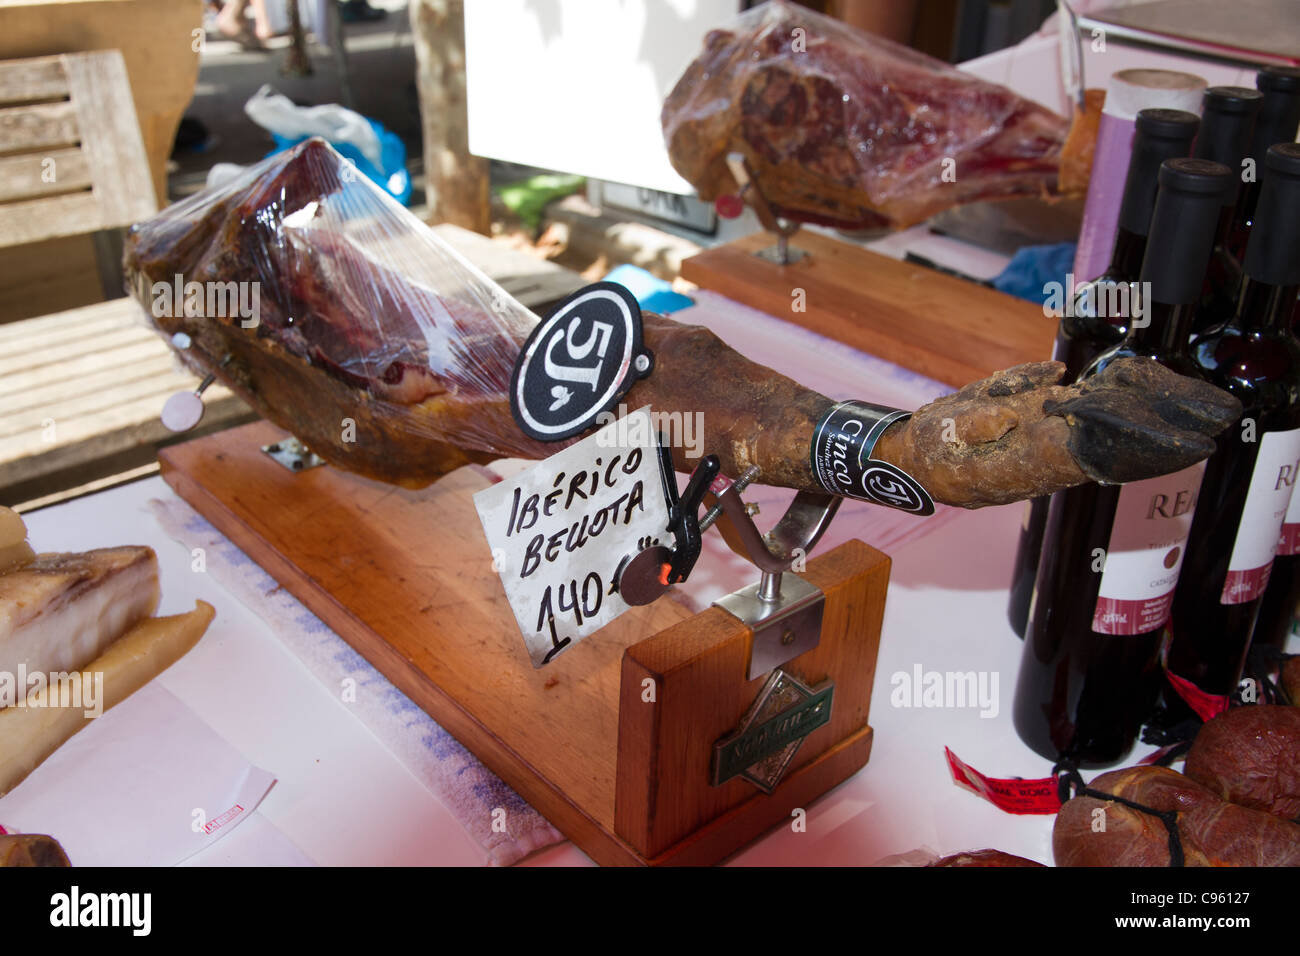 Ham Iberico Bellota displayed for sale Stock Photo